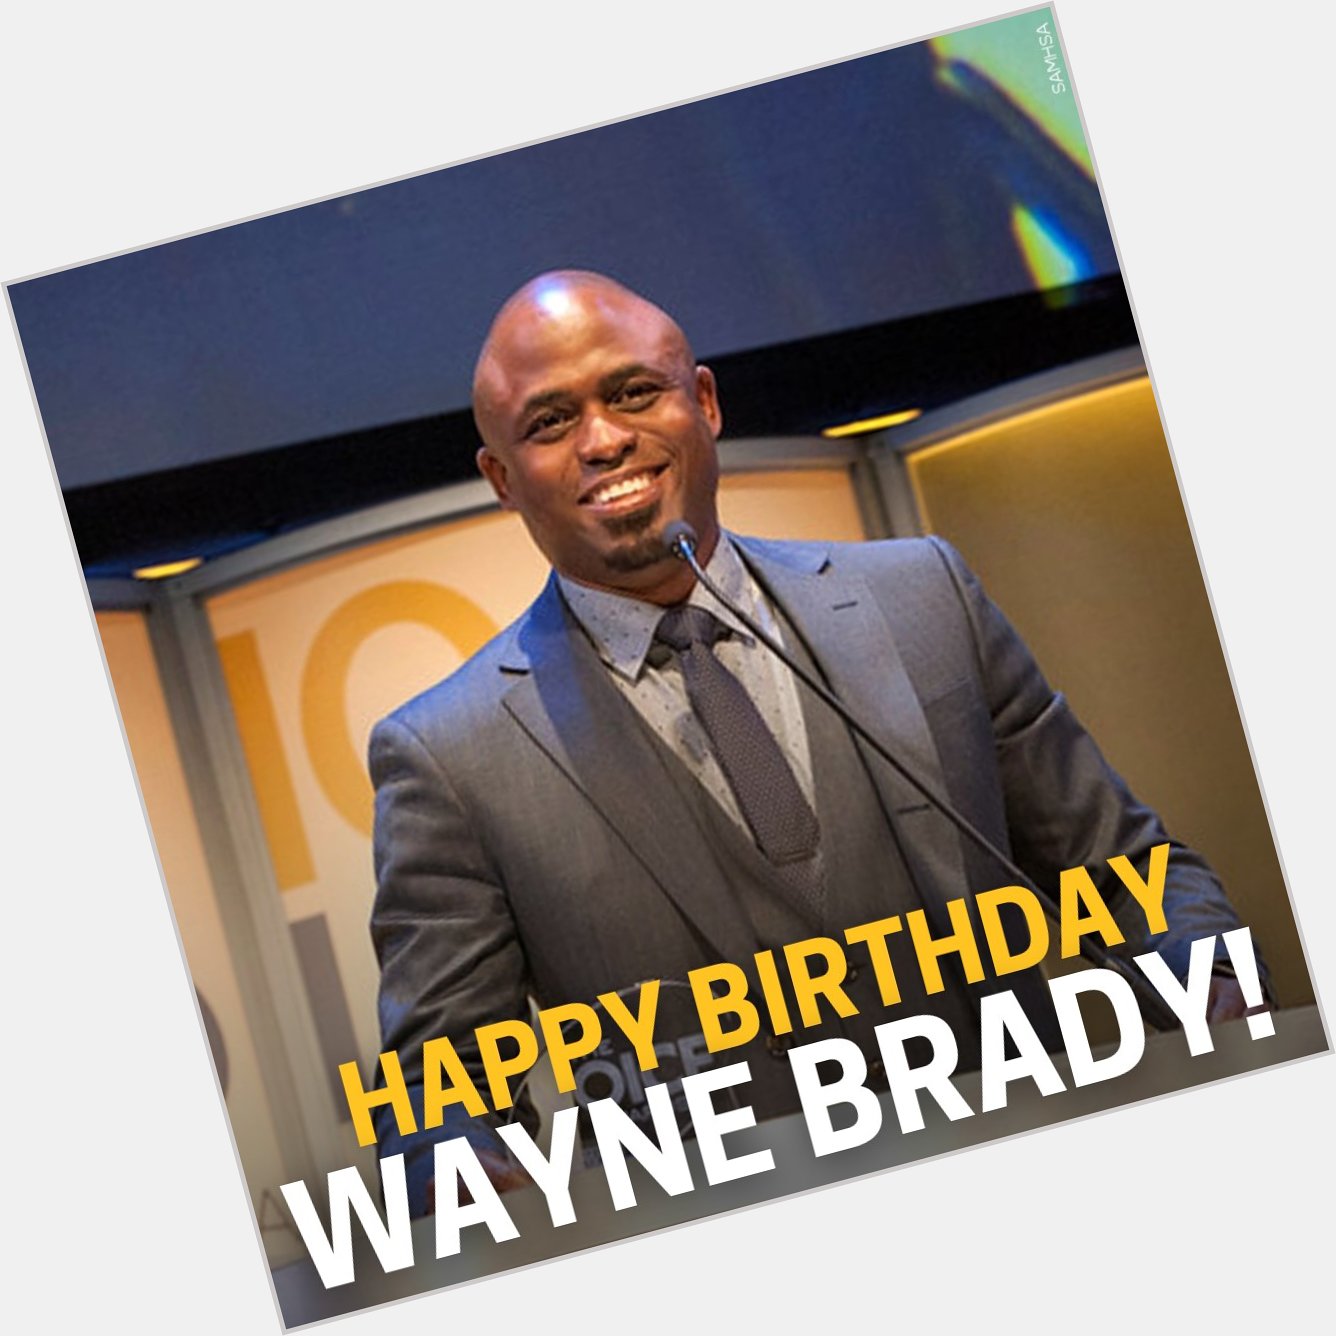 Happy Birthday, Wayne Brady! 